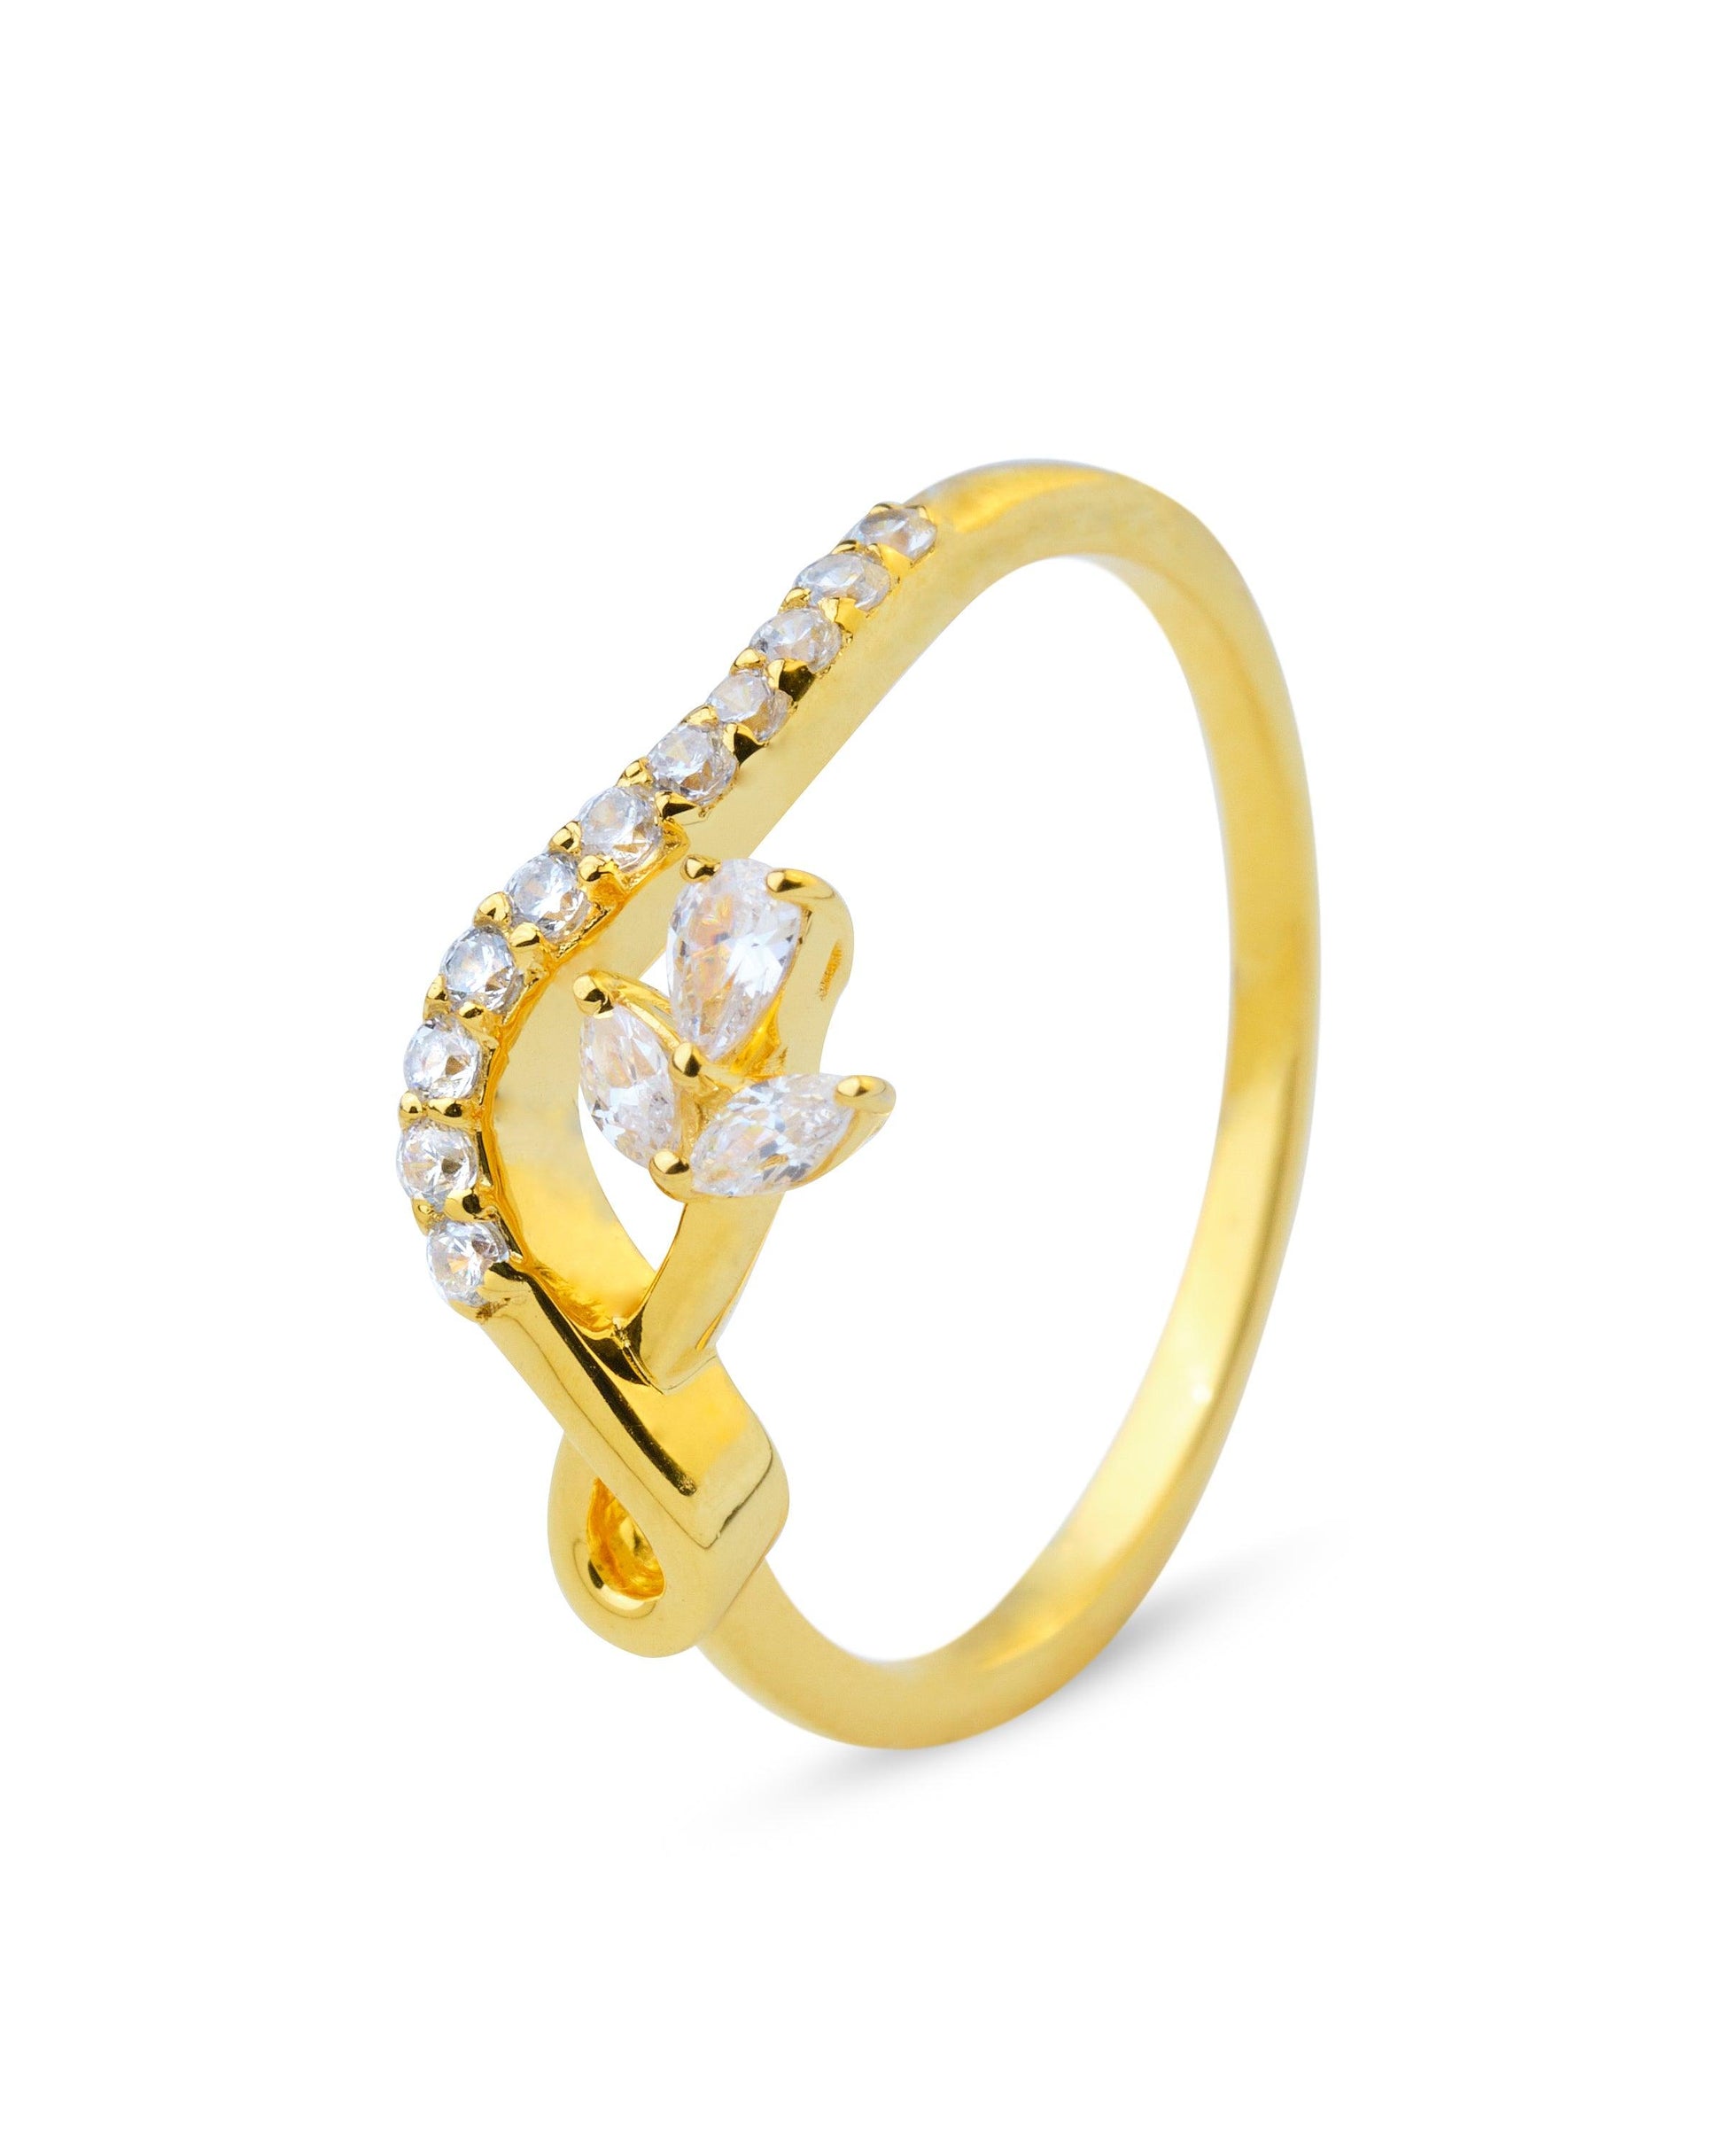 Ivory Leafy Gold & Diamond Ring - Chandrani Pearls